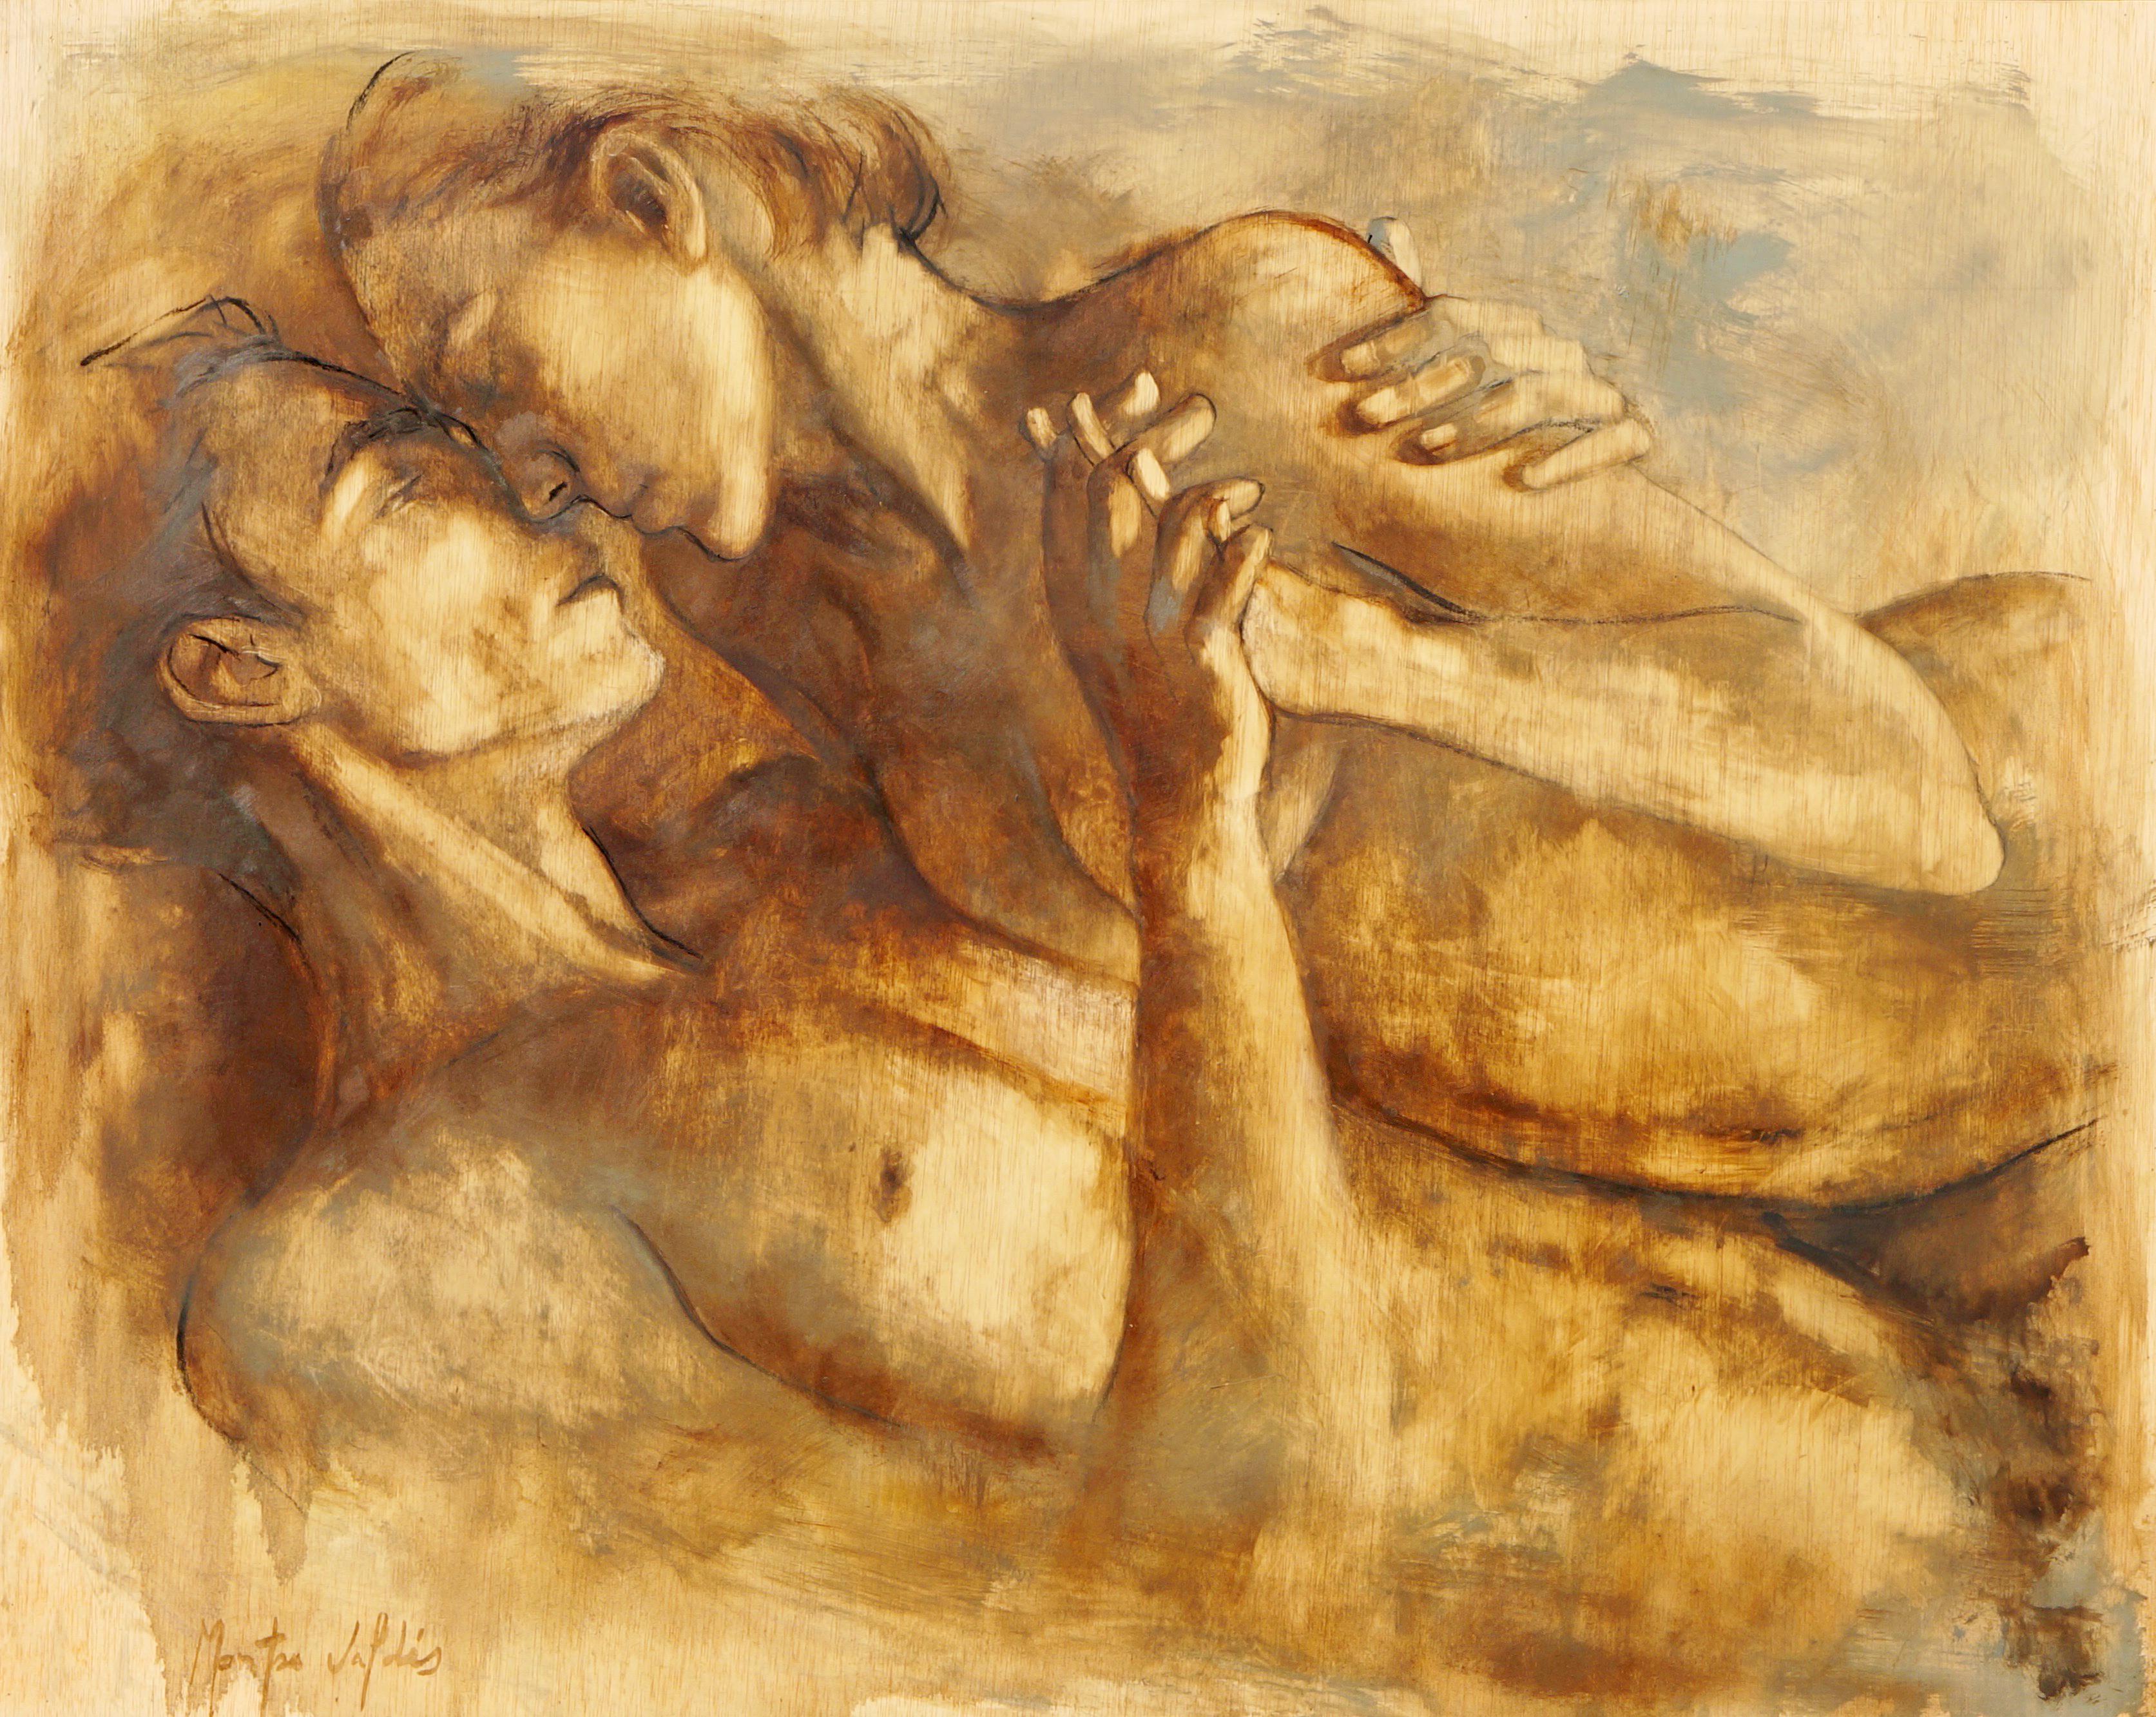 Montse Valdés Portrait Painting - 10-12-12-14 - 21st Century, Contemporary, Nude Painting, Oil on Wood Panel